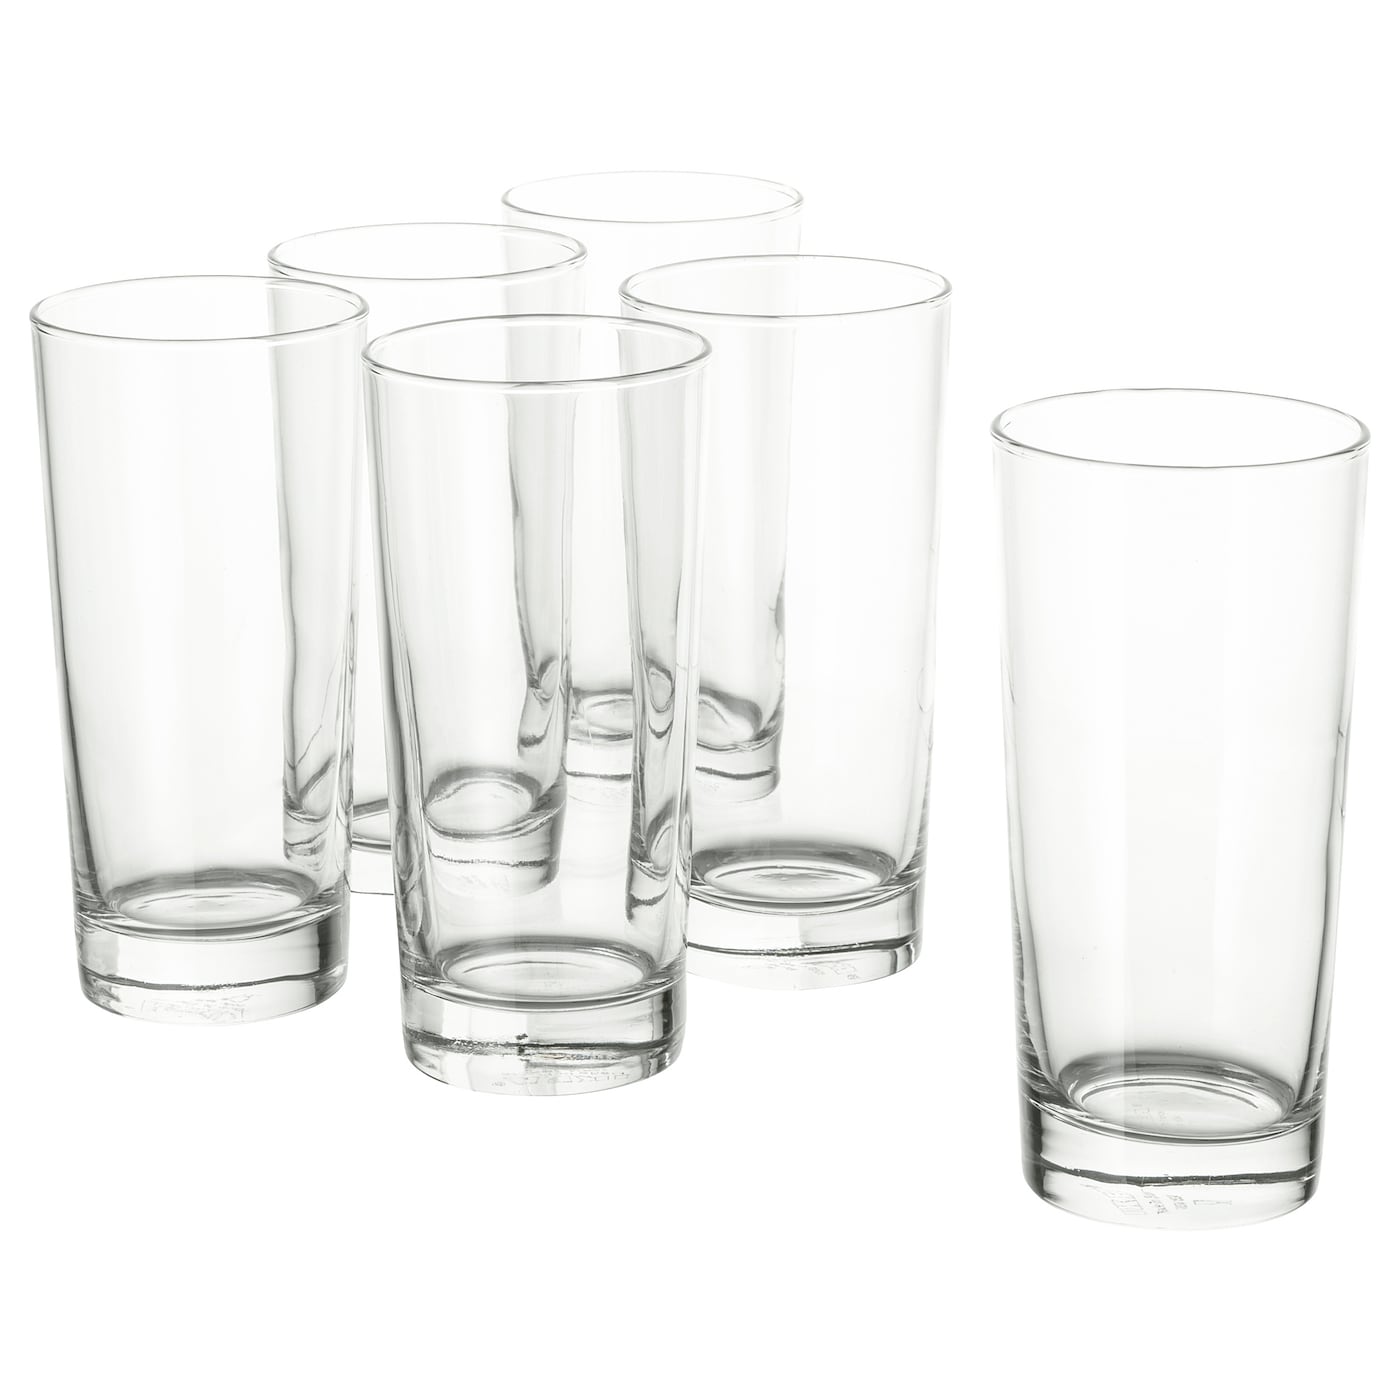 Набор стаканов, 6 шт. -IKEA GODIS, 400 мл, прозрачное стекло, ГОДИС ИКЕА